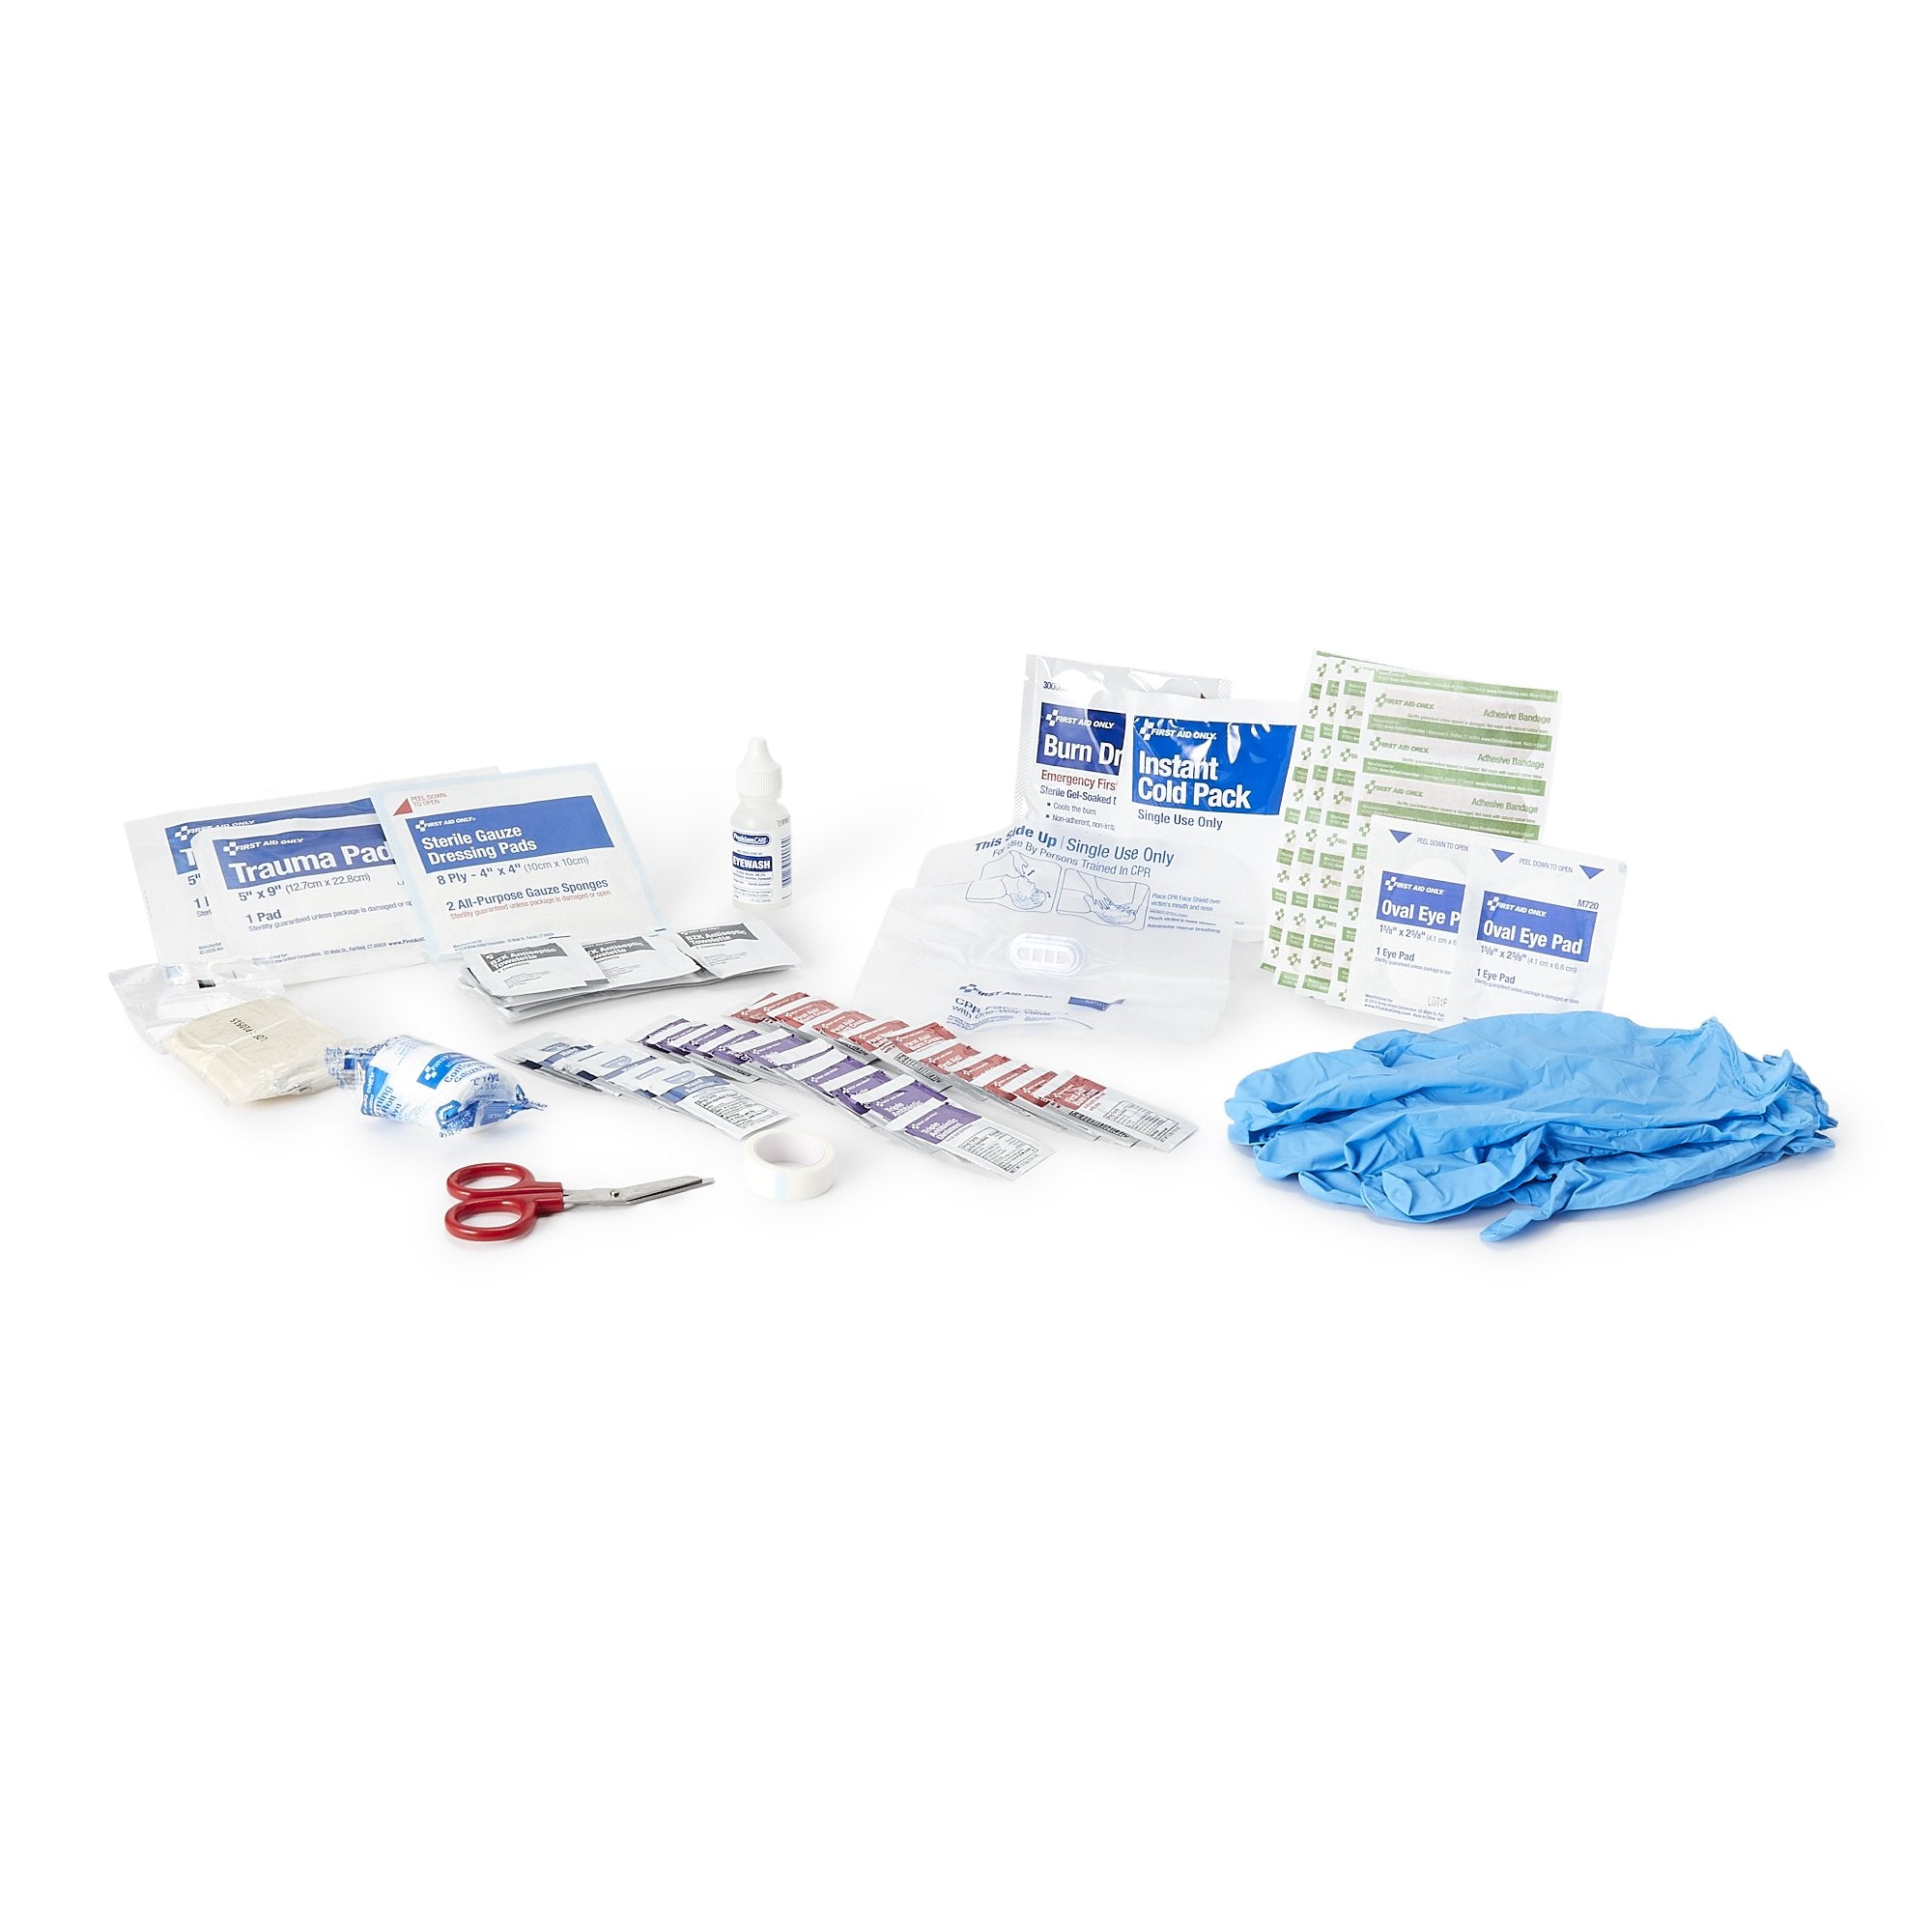 First Aid Kit McKesson 10 Person Plastic Case